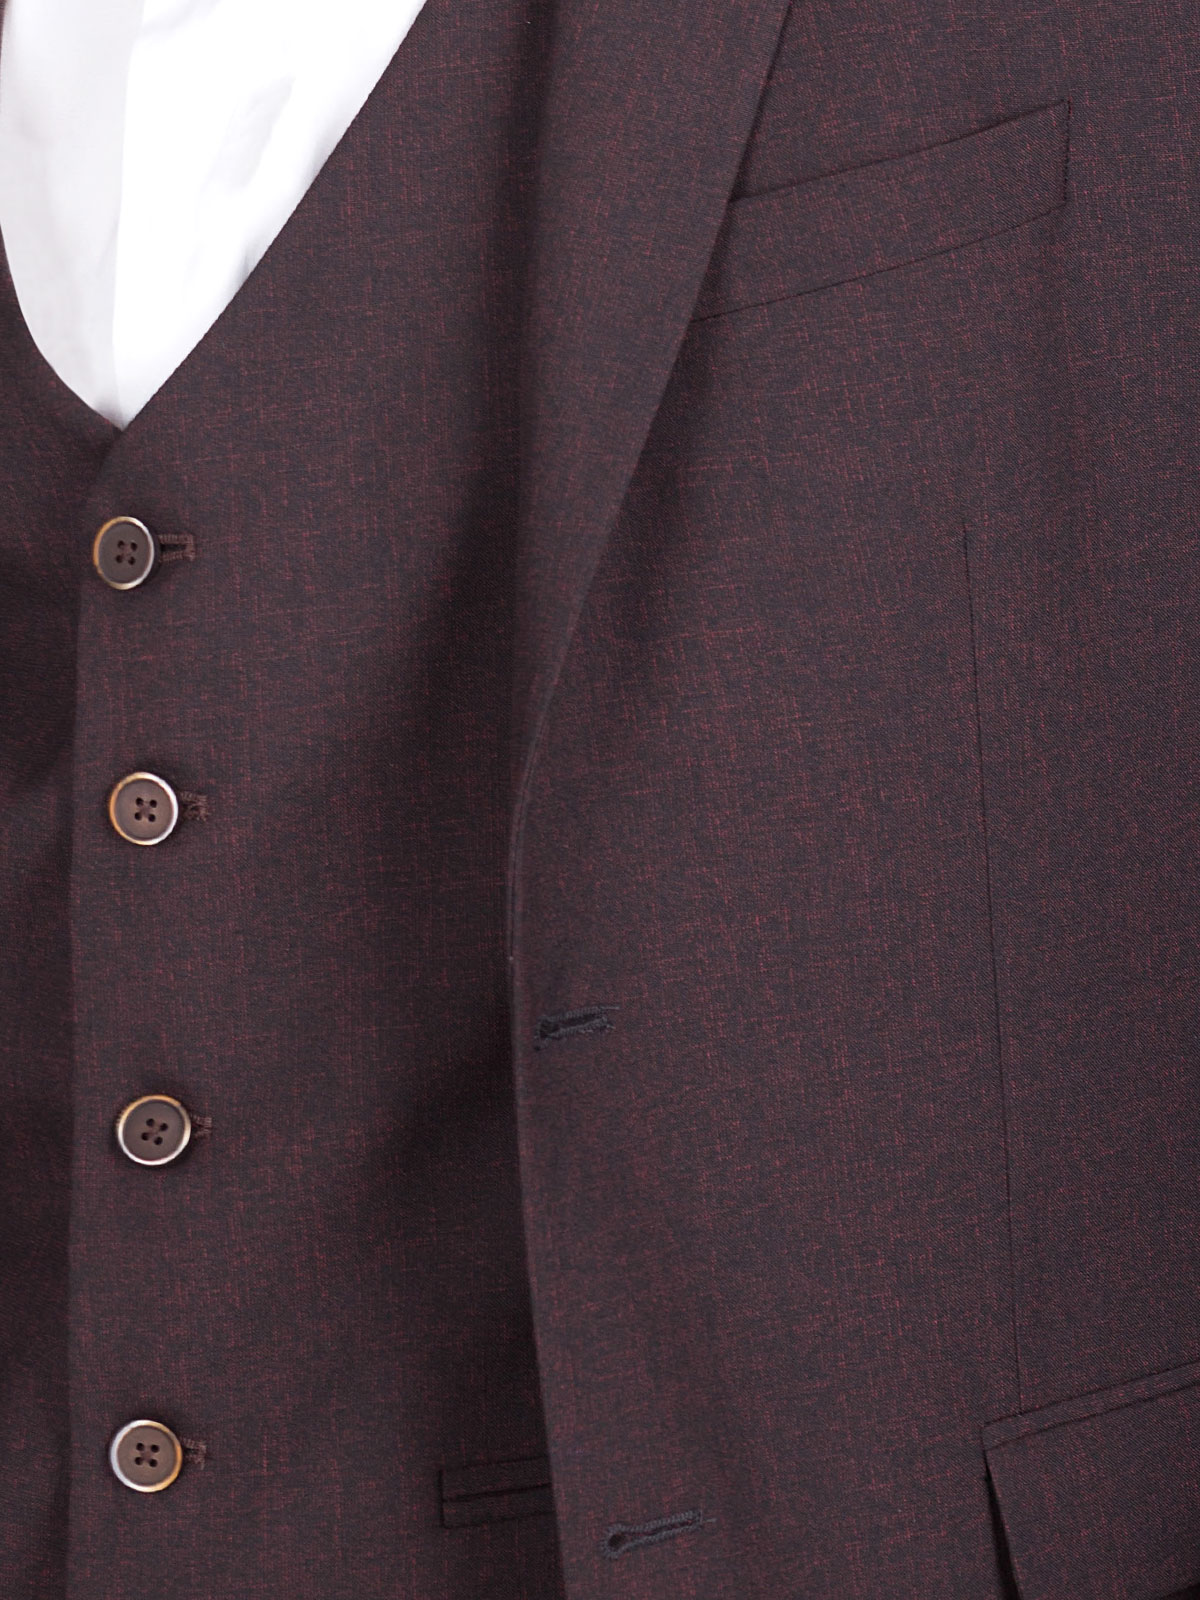 Fitted jacket in burgundy melange - 64106 € 61.30 img2